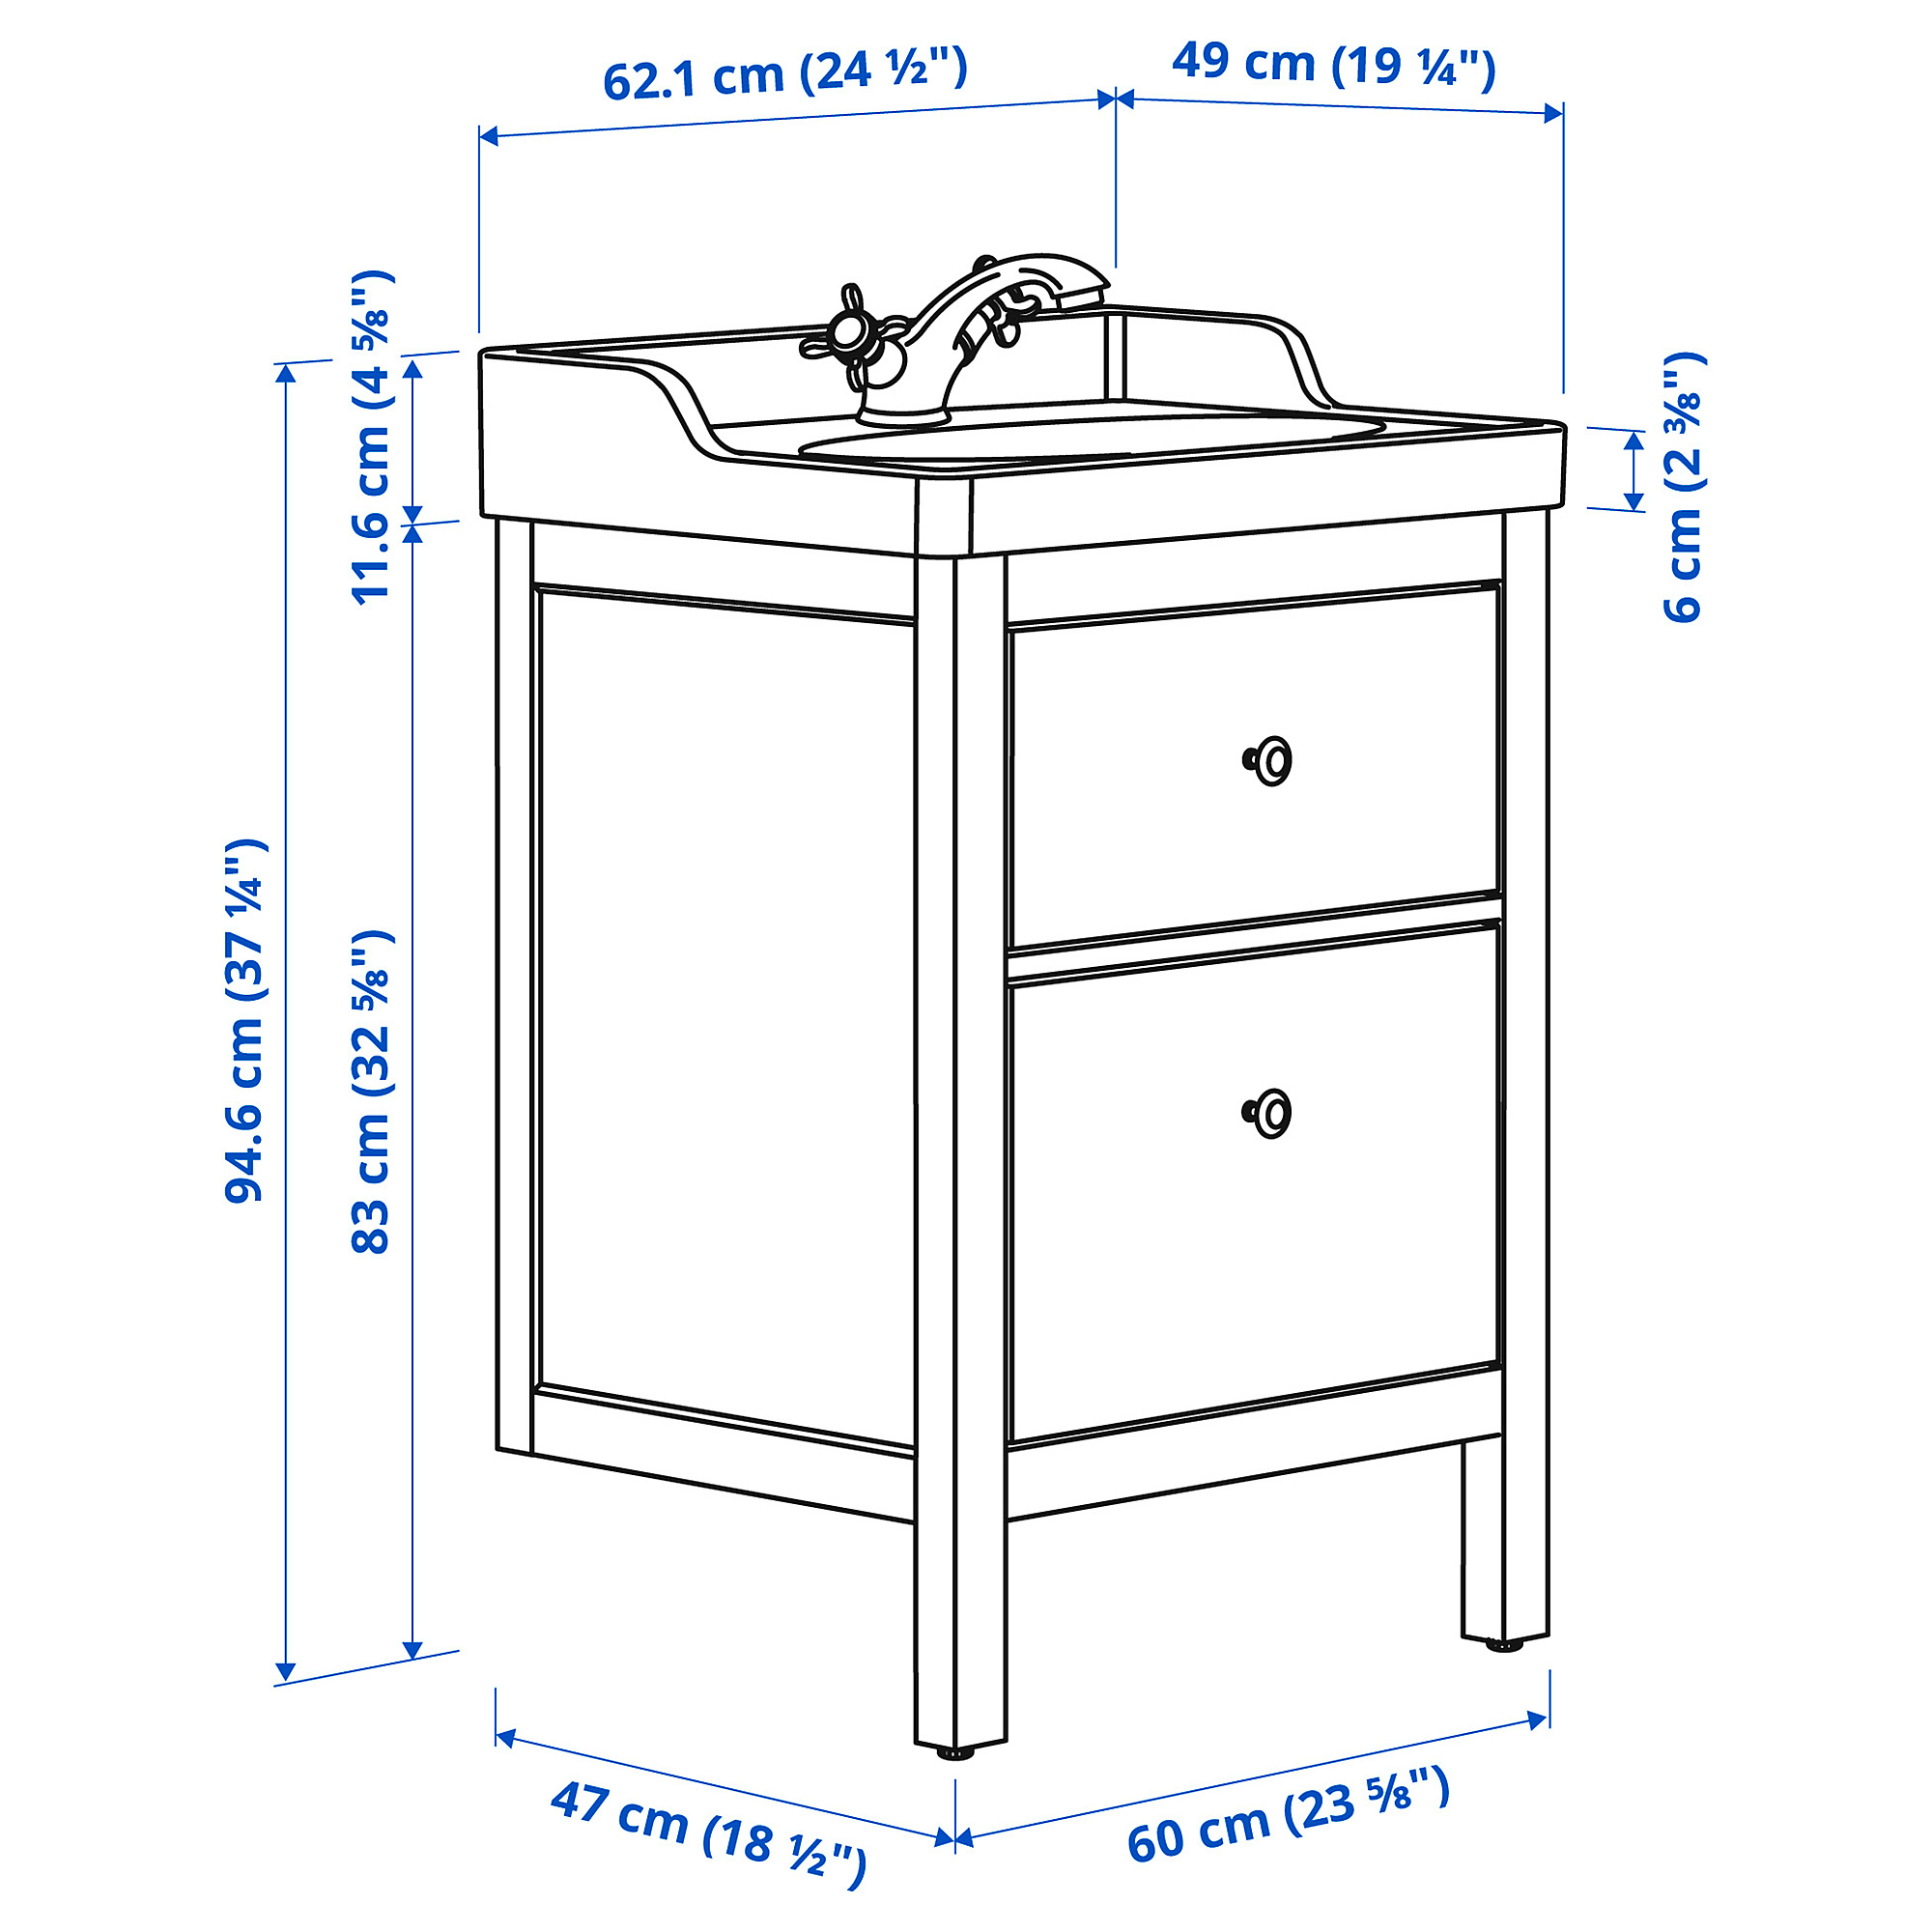 HEMNES/RUTSJÖN wash-stnd w drawers/wash-basin/tap